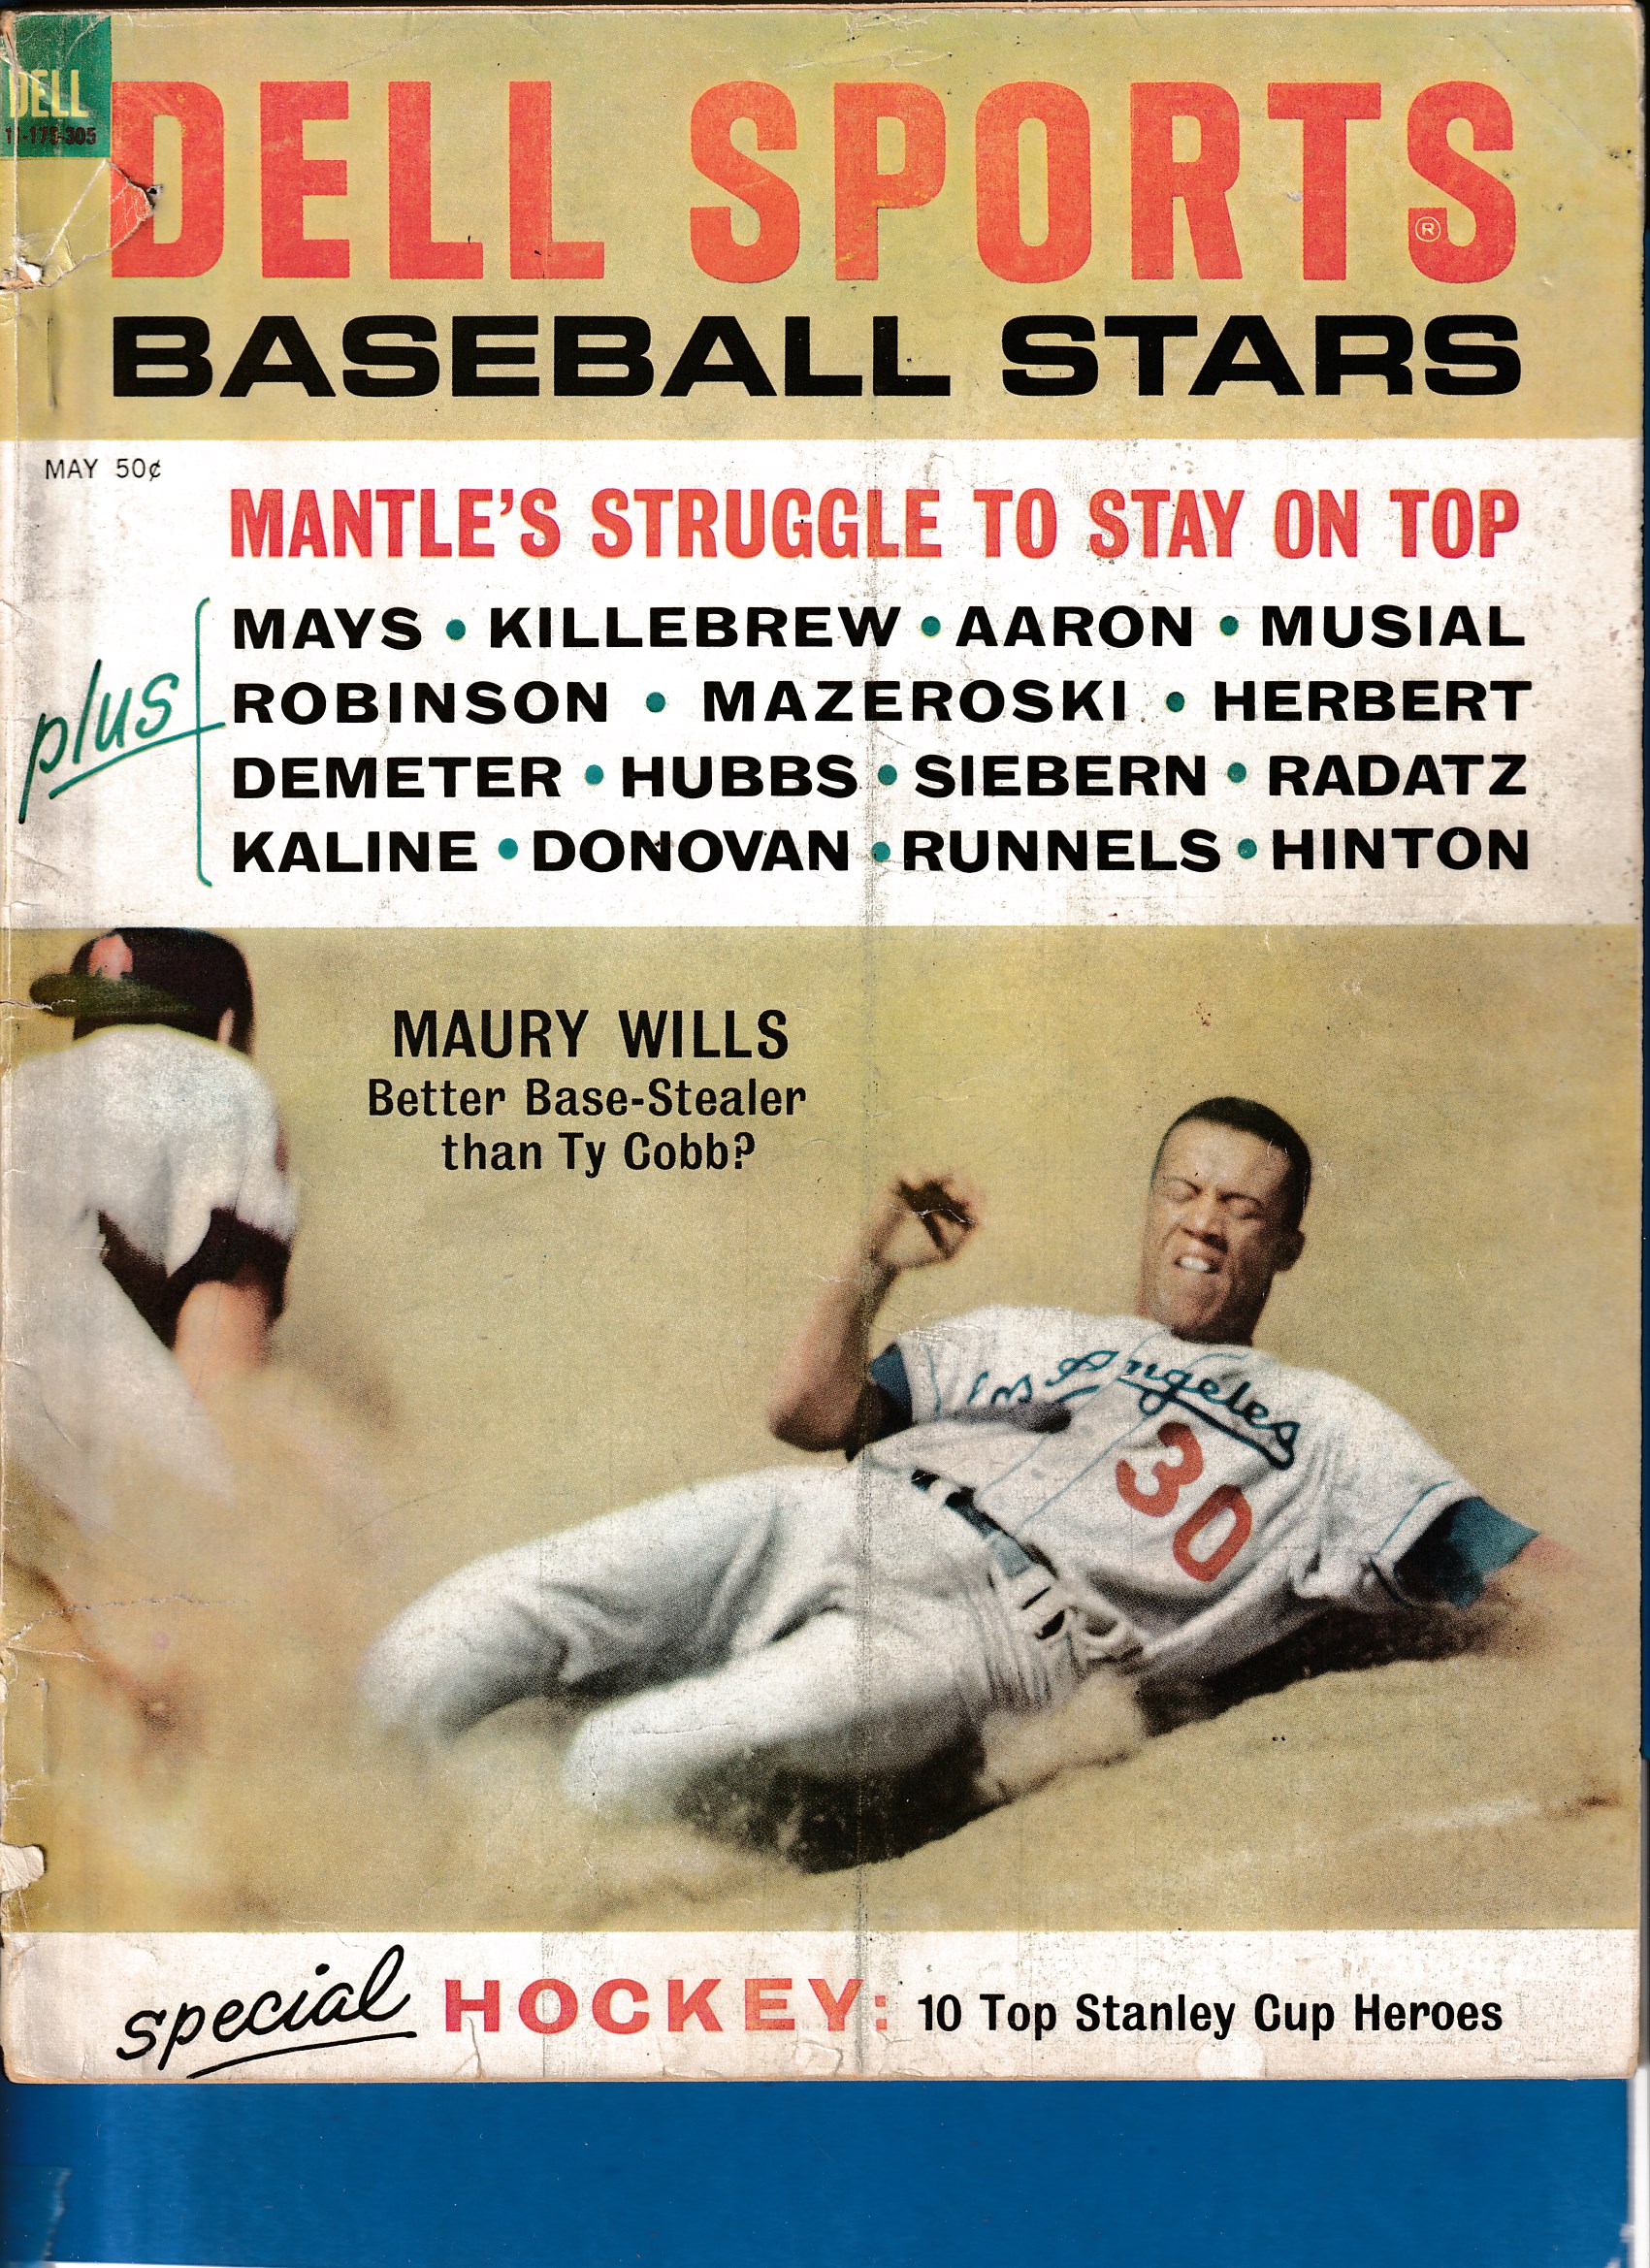  Maury Wills - SPORT & DELL SPORTS 1963 - 'Better Base-Stealer than Cobb?' Baseball cards value